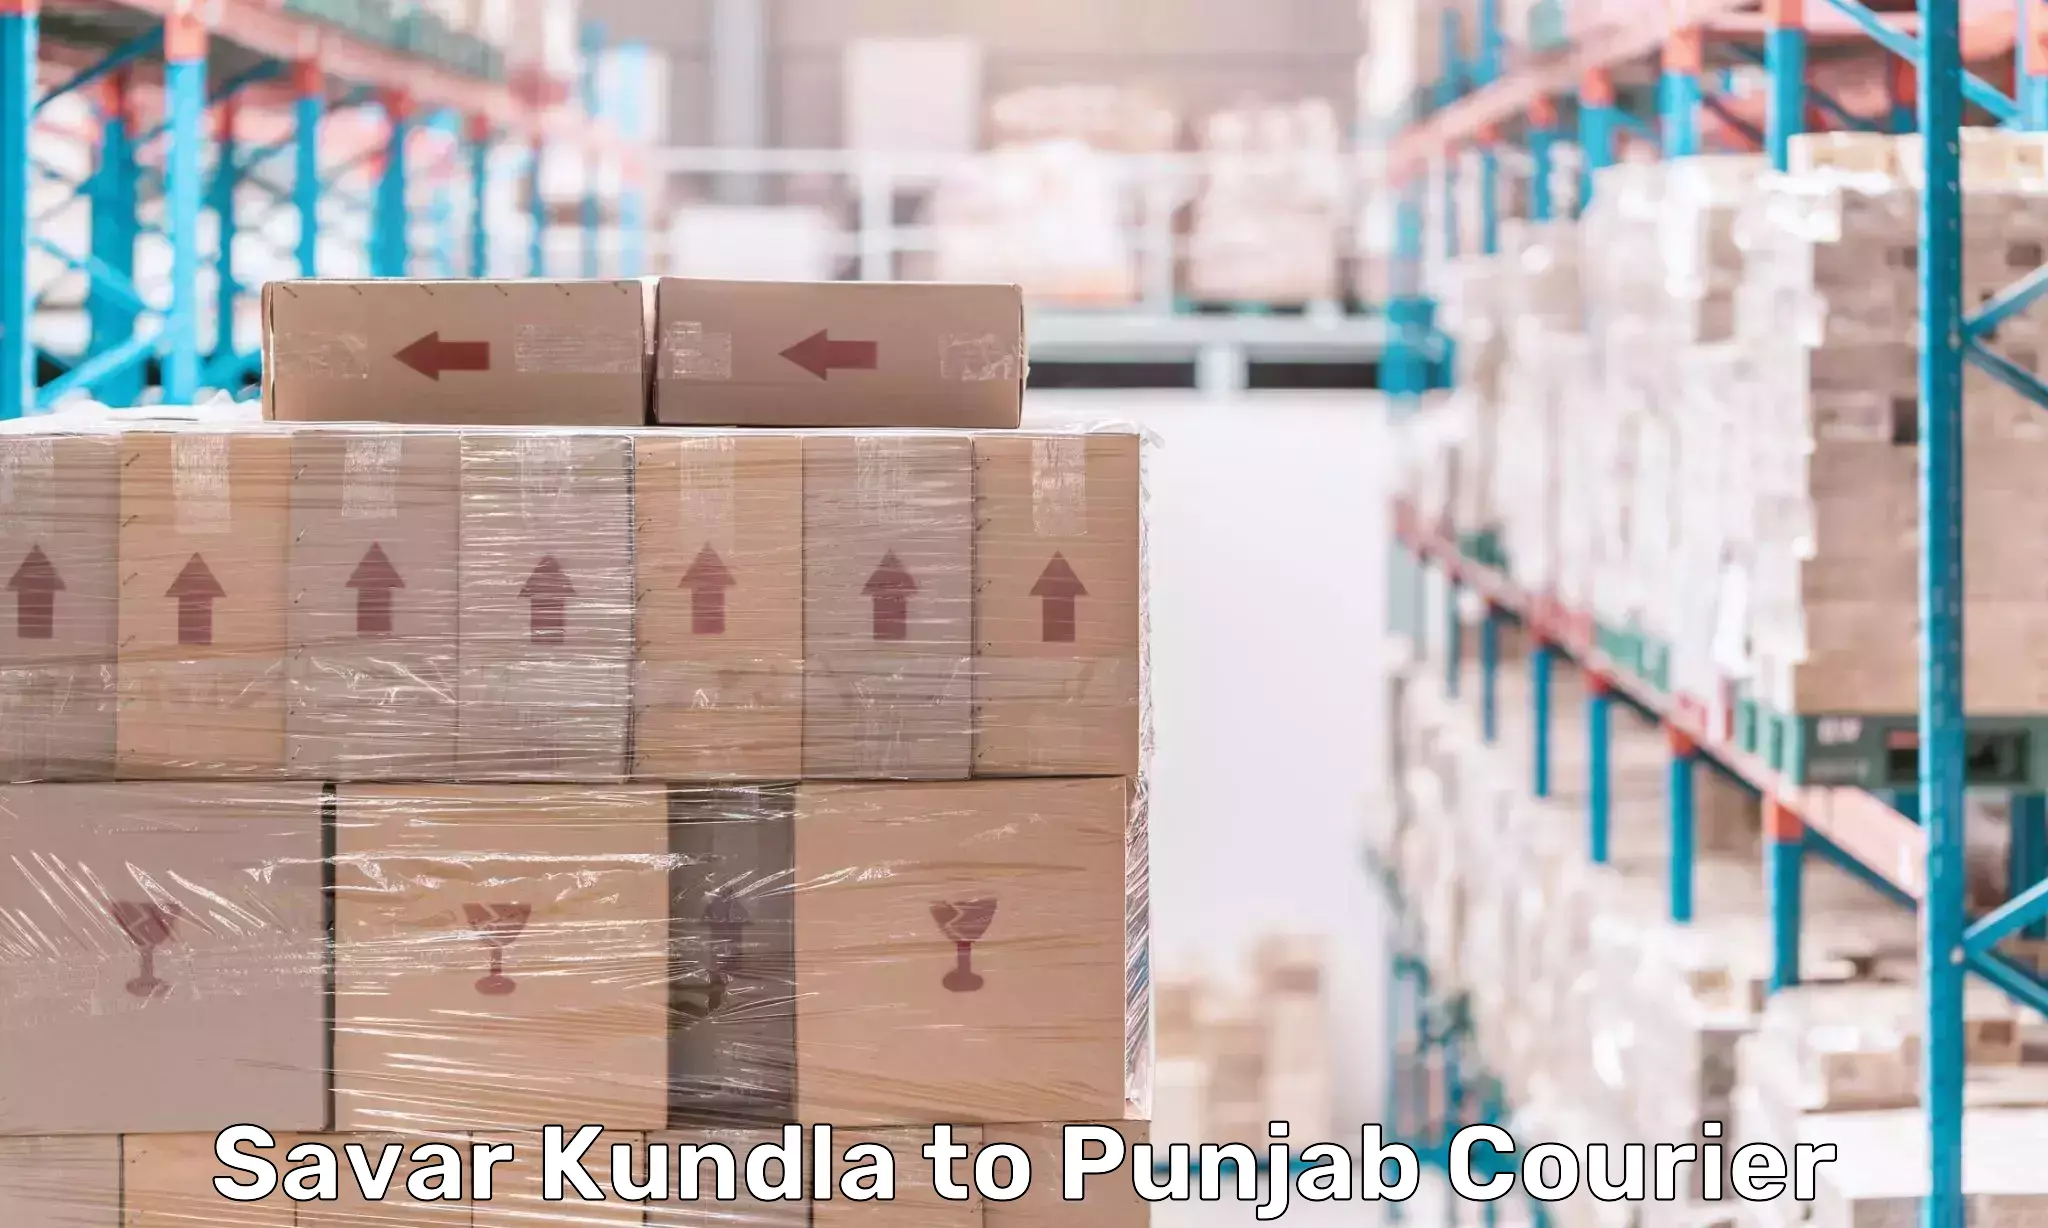 High-speed parcel service Savar Kundla to Ludhiana